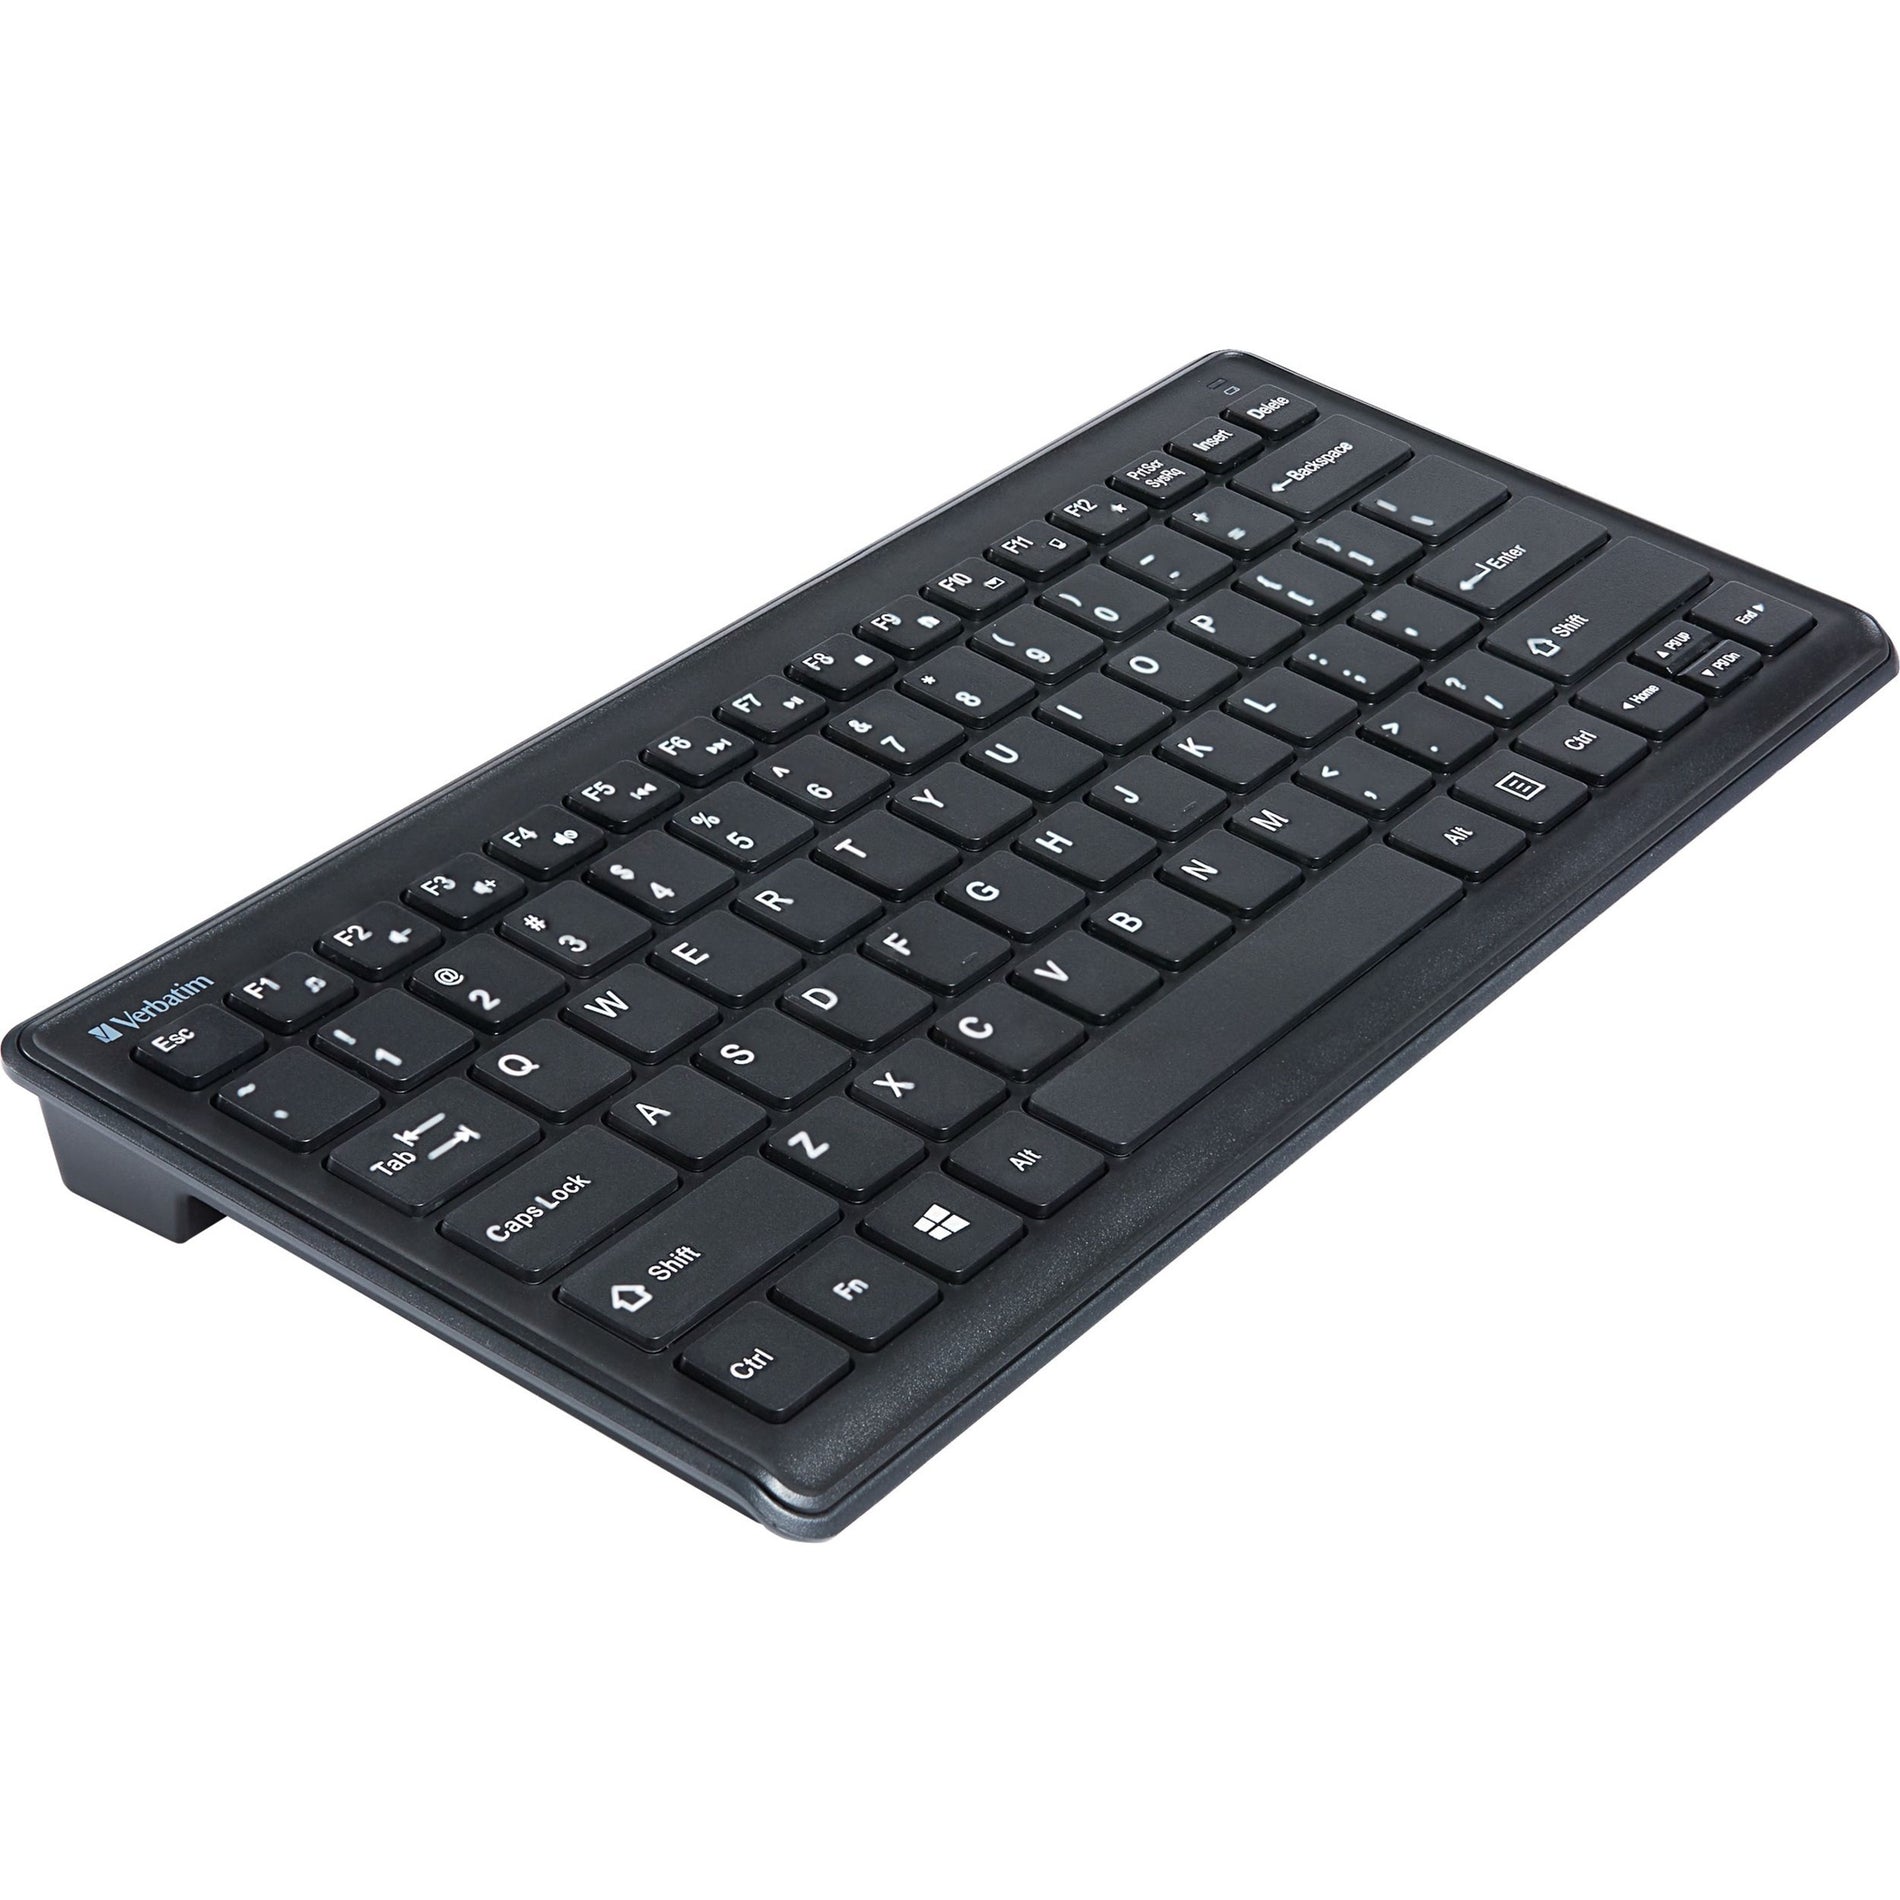 Verbatim 70739 Silent Wireless Compact Keyboard and Mouse, Soft-touch Keys, Low-profile Keys, Adjustable Tilt, Blue LED, 1600 dpi